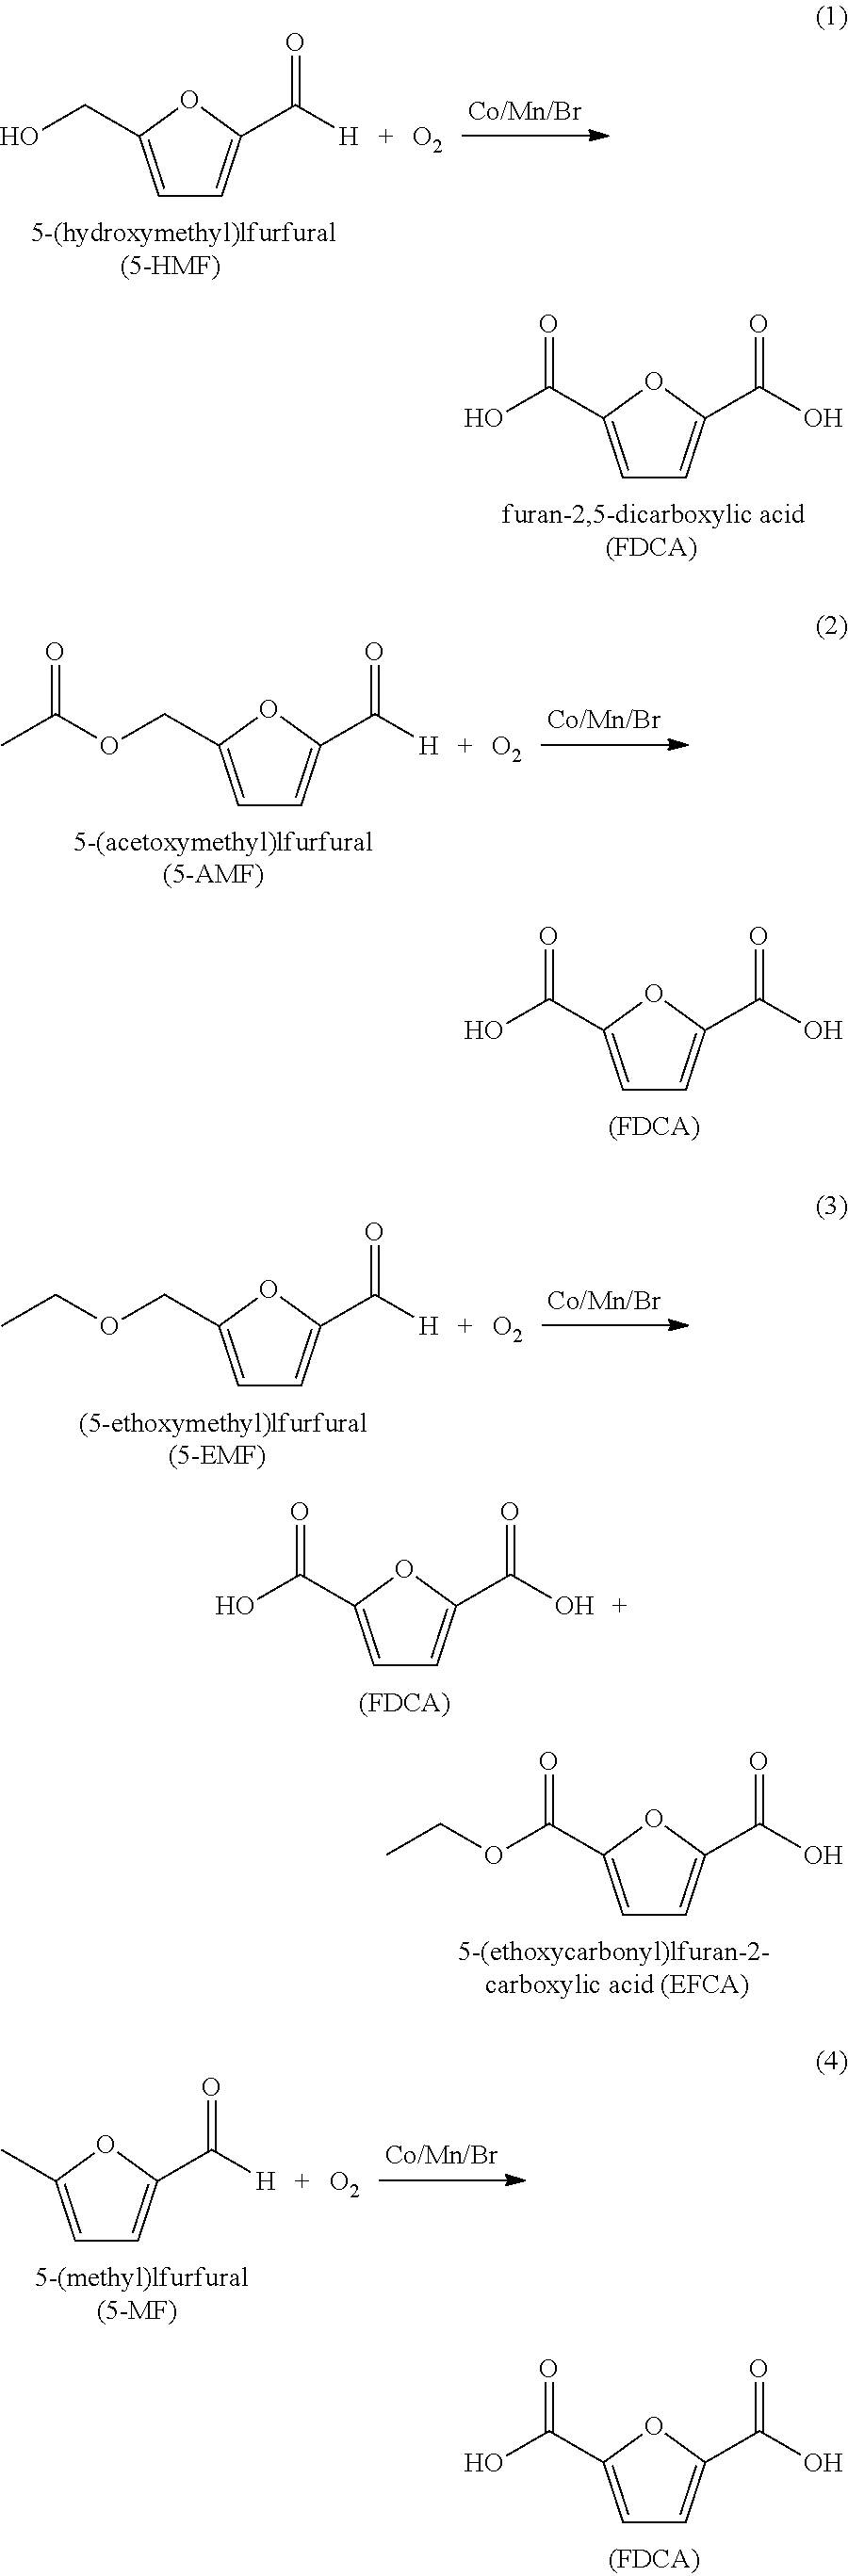 Purifying crude furan 2,5-dicarboxylic acid by hydrogenation